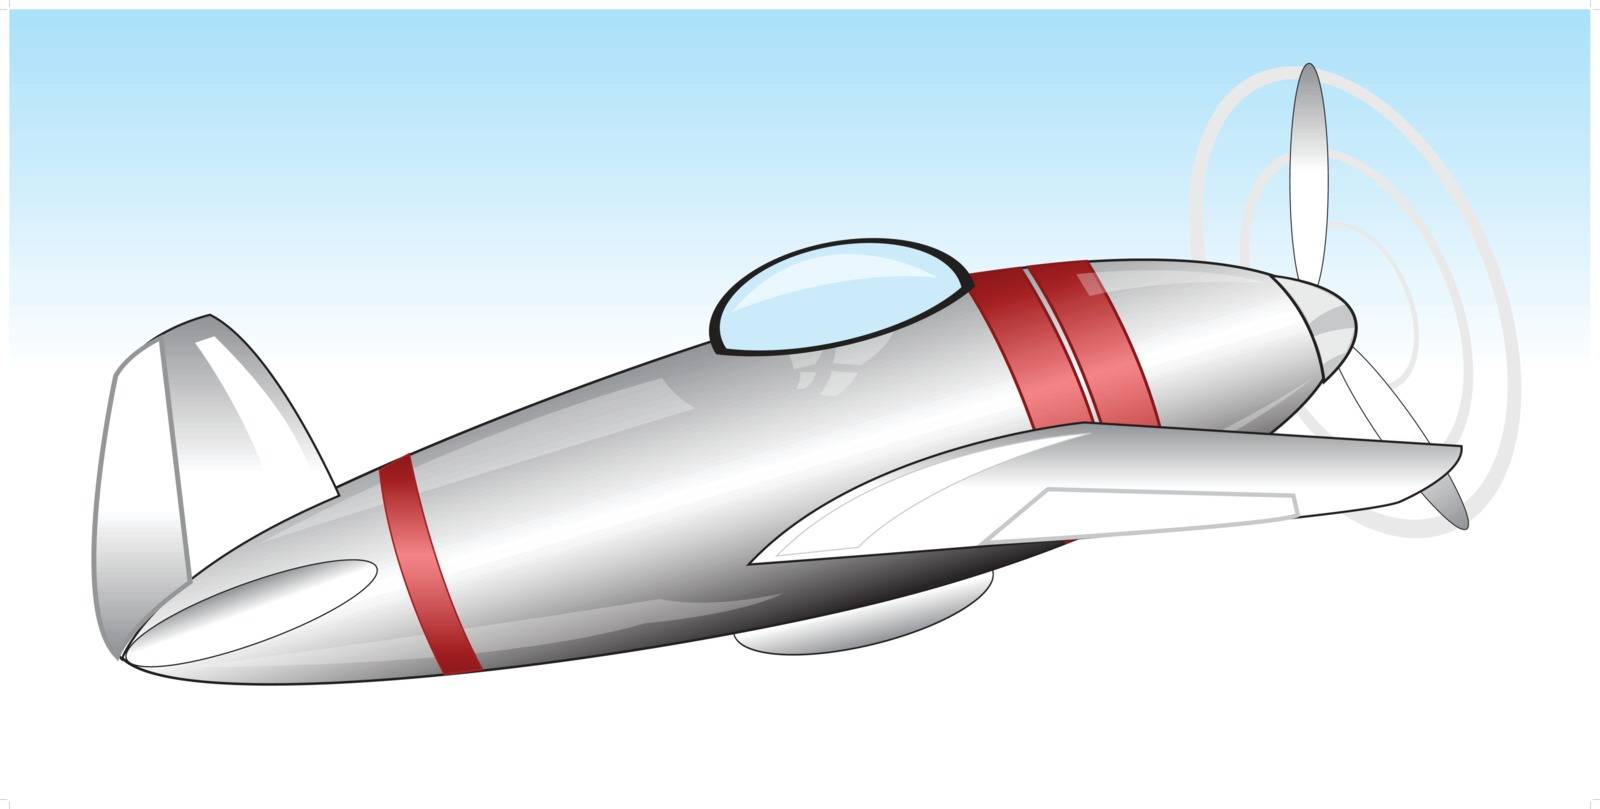 The Warplane flies in the sky.Vector illustration 